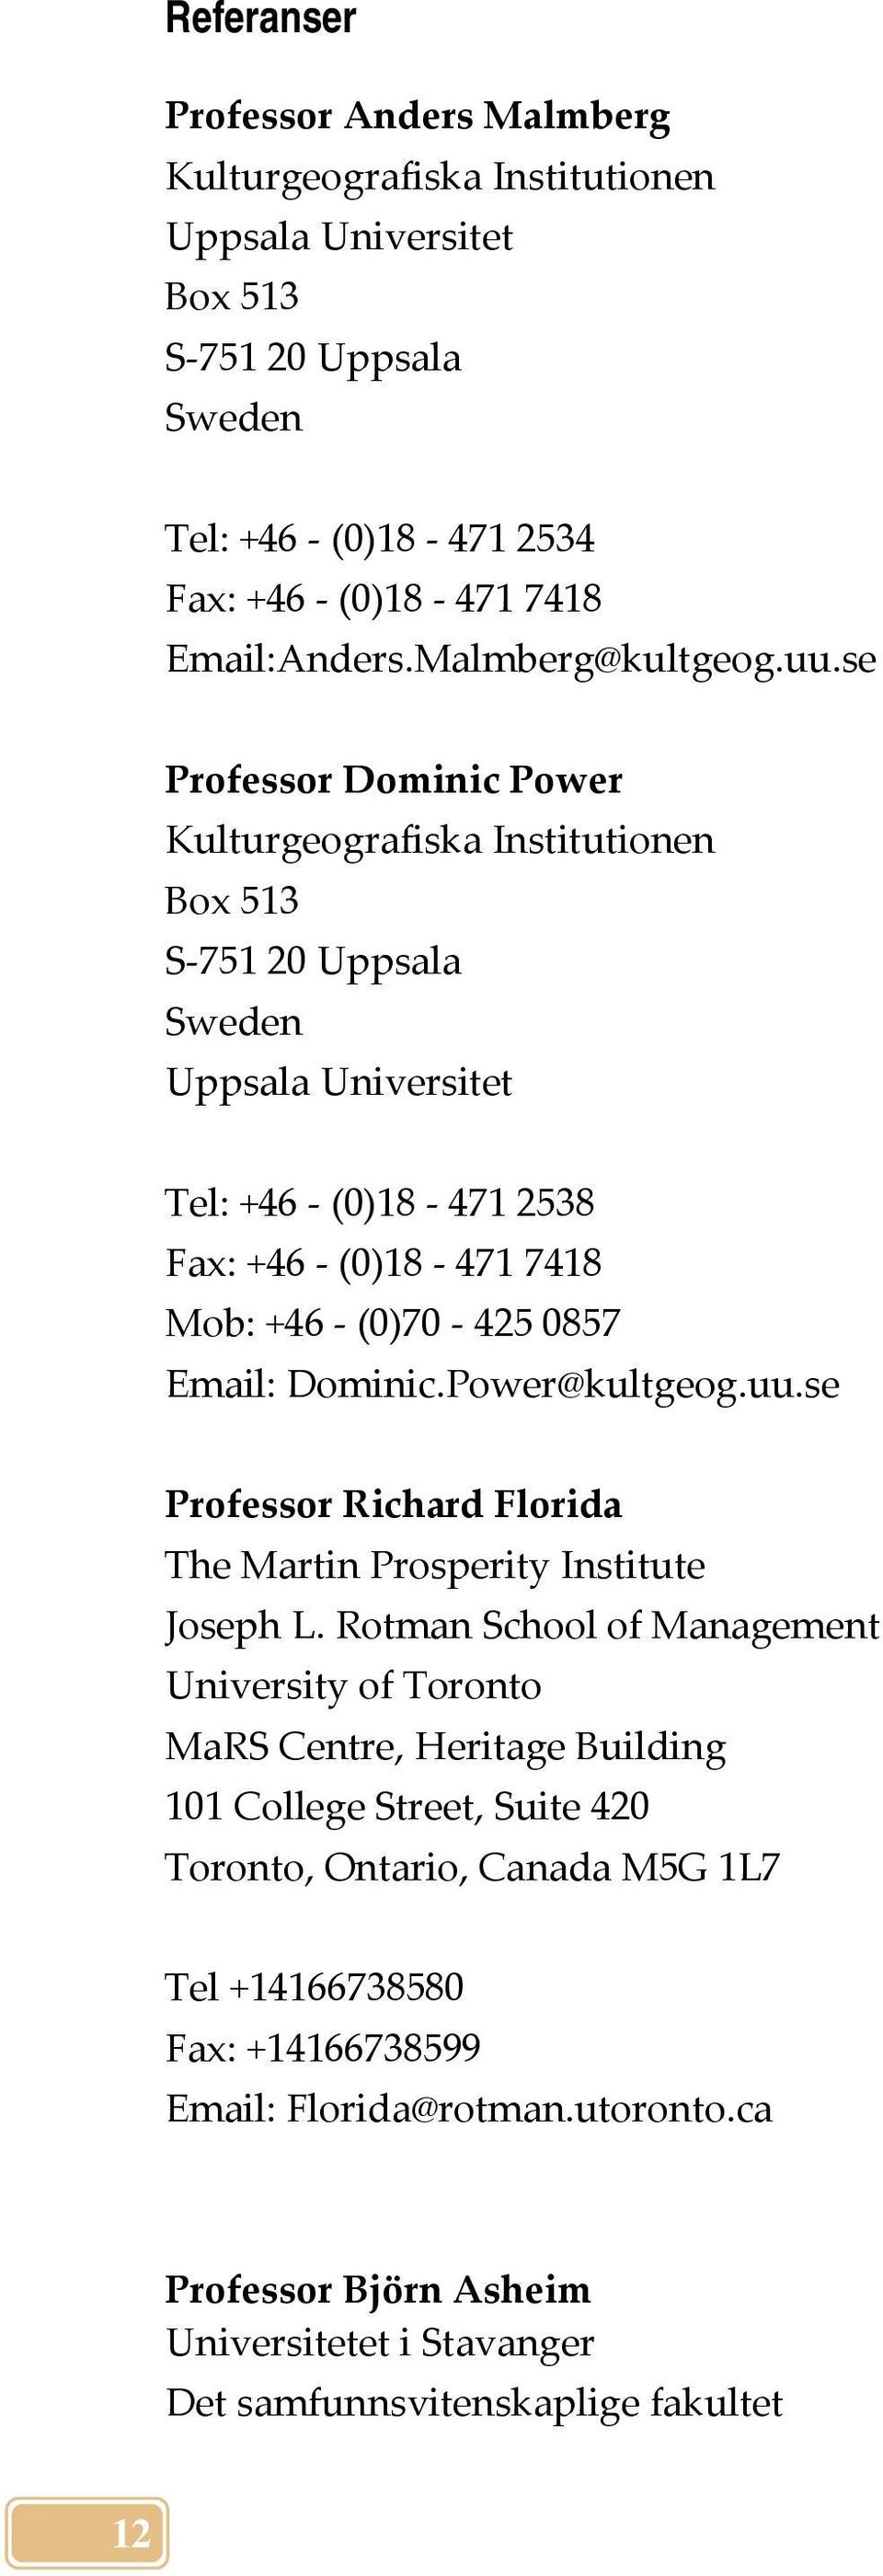 se Professor Dominic Power Kulturgeografiska Institutionen Box 513 S 751 20 Uppsala Sweden Uppsala Universitet Tel: +46 (0)18 471 2538 Fax: +46 (0)18 471 7418 Mob: +46 (0)70 425 0857 Email: Dominic.